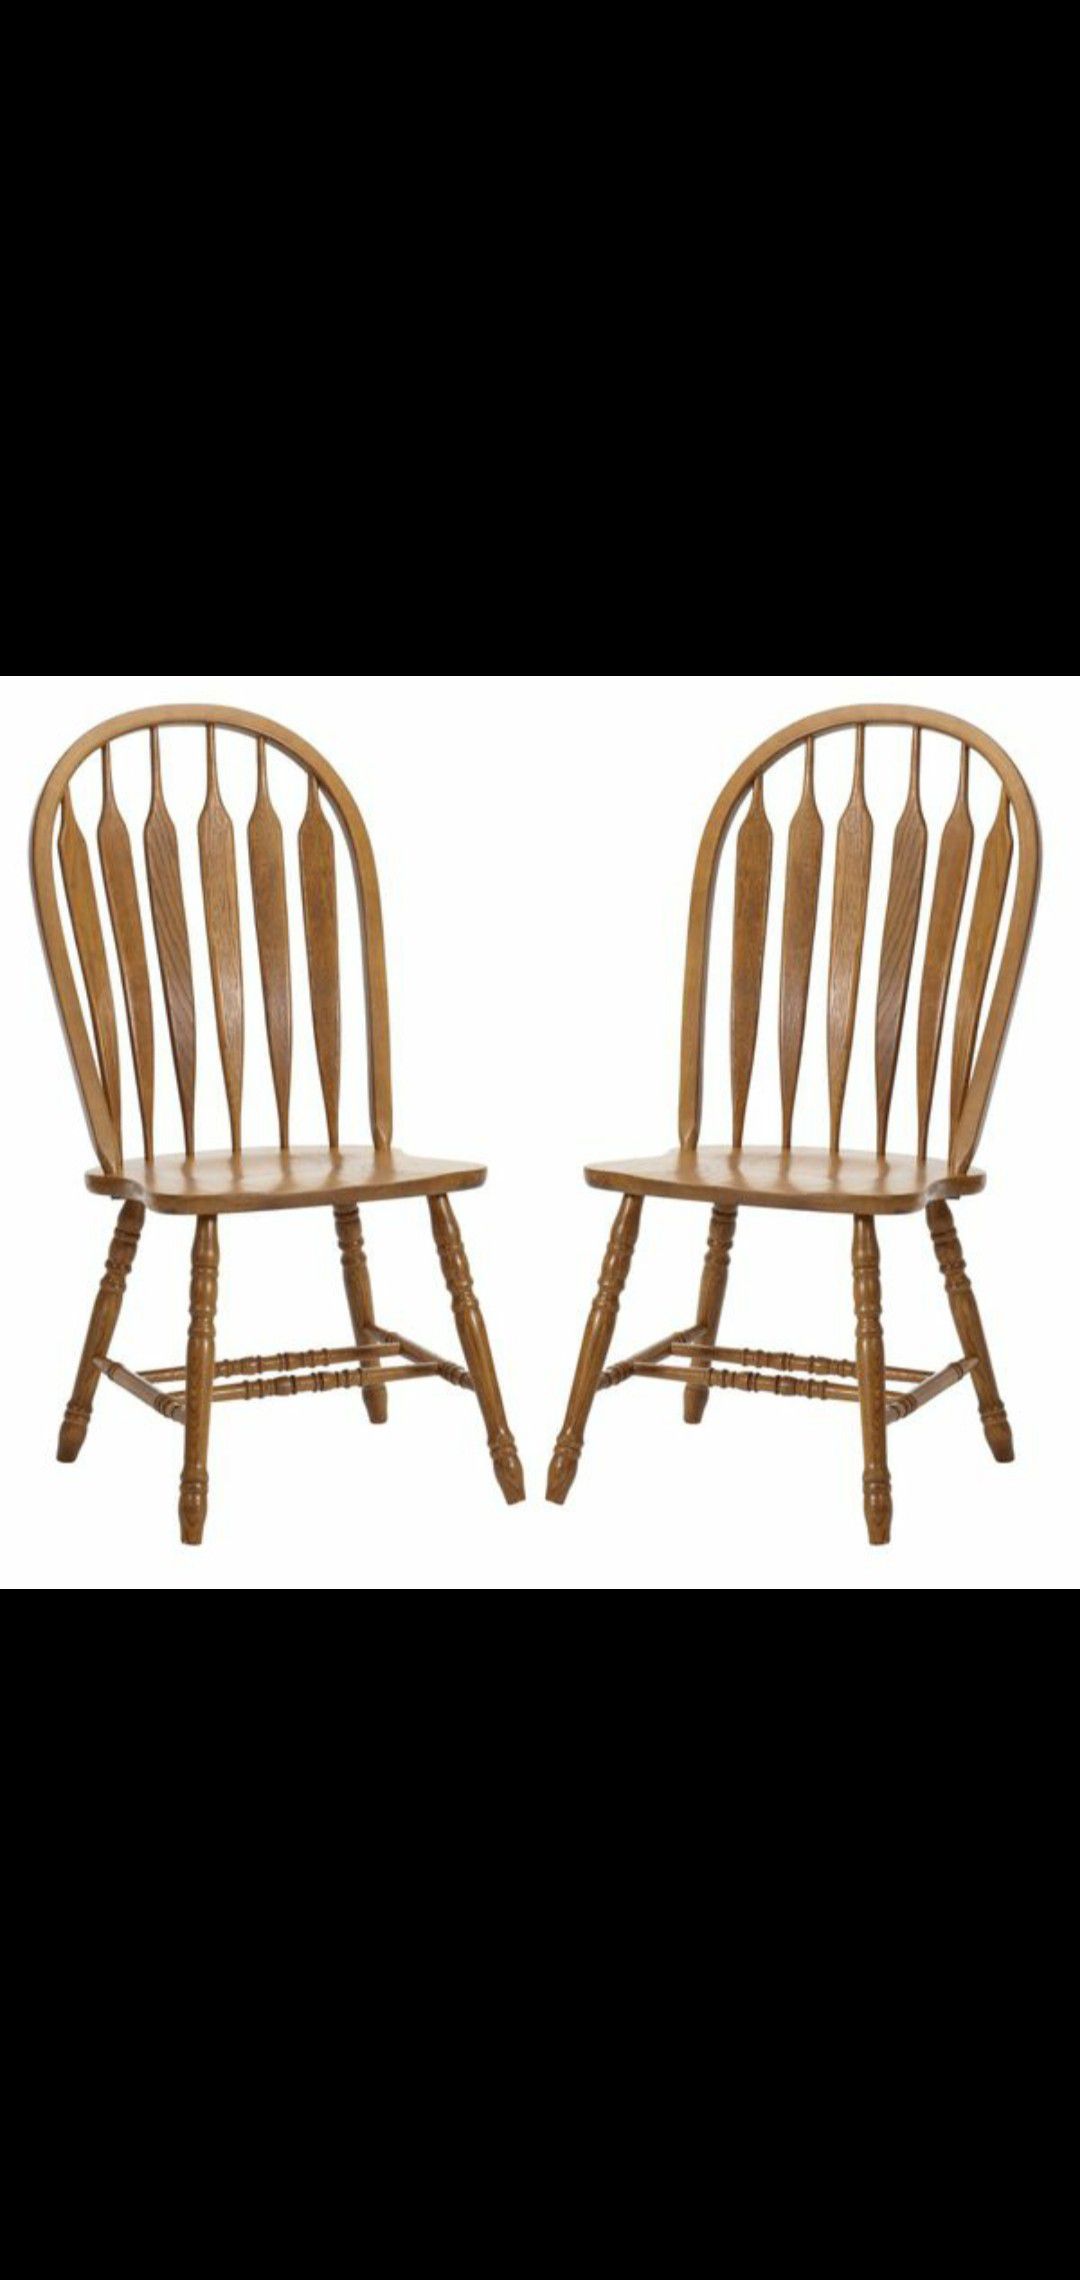 Solid oak wood chairs